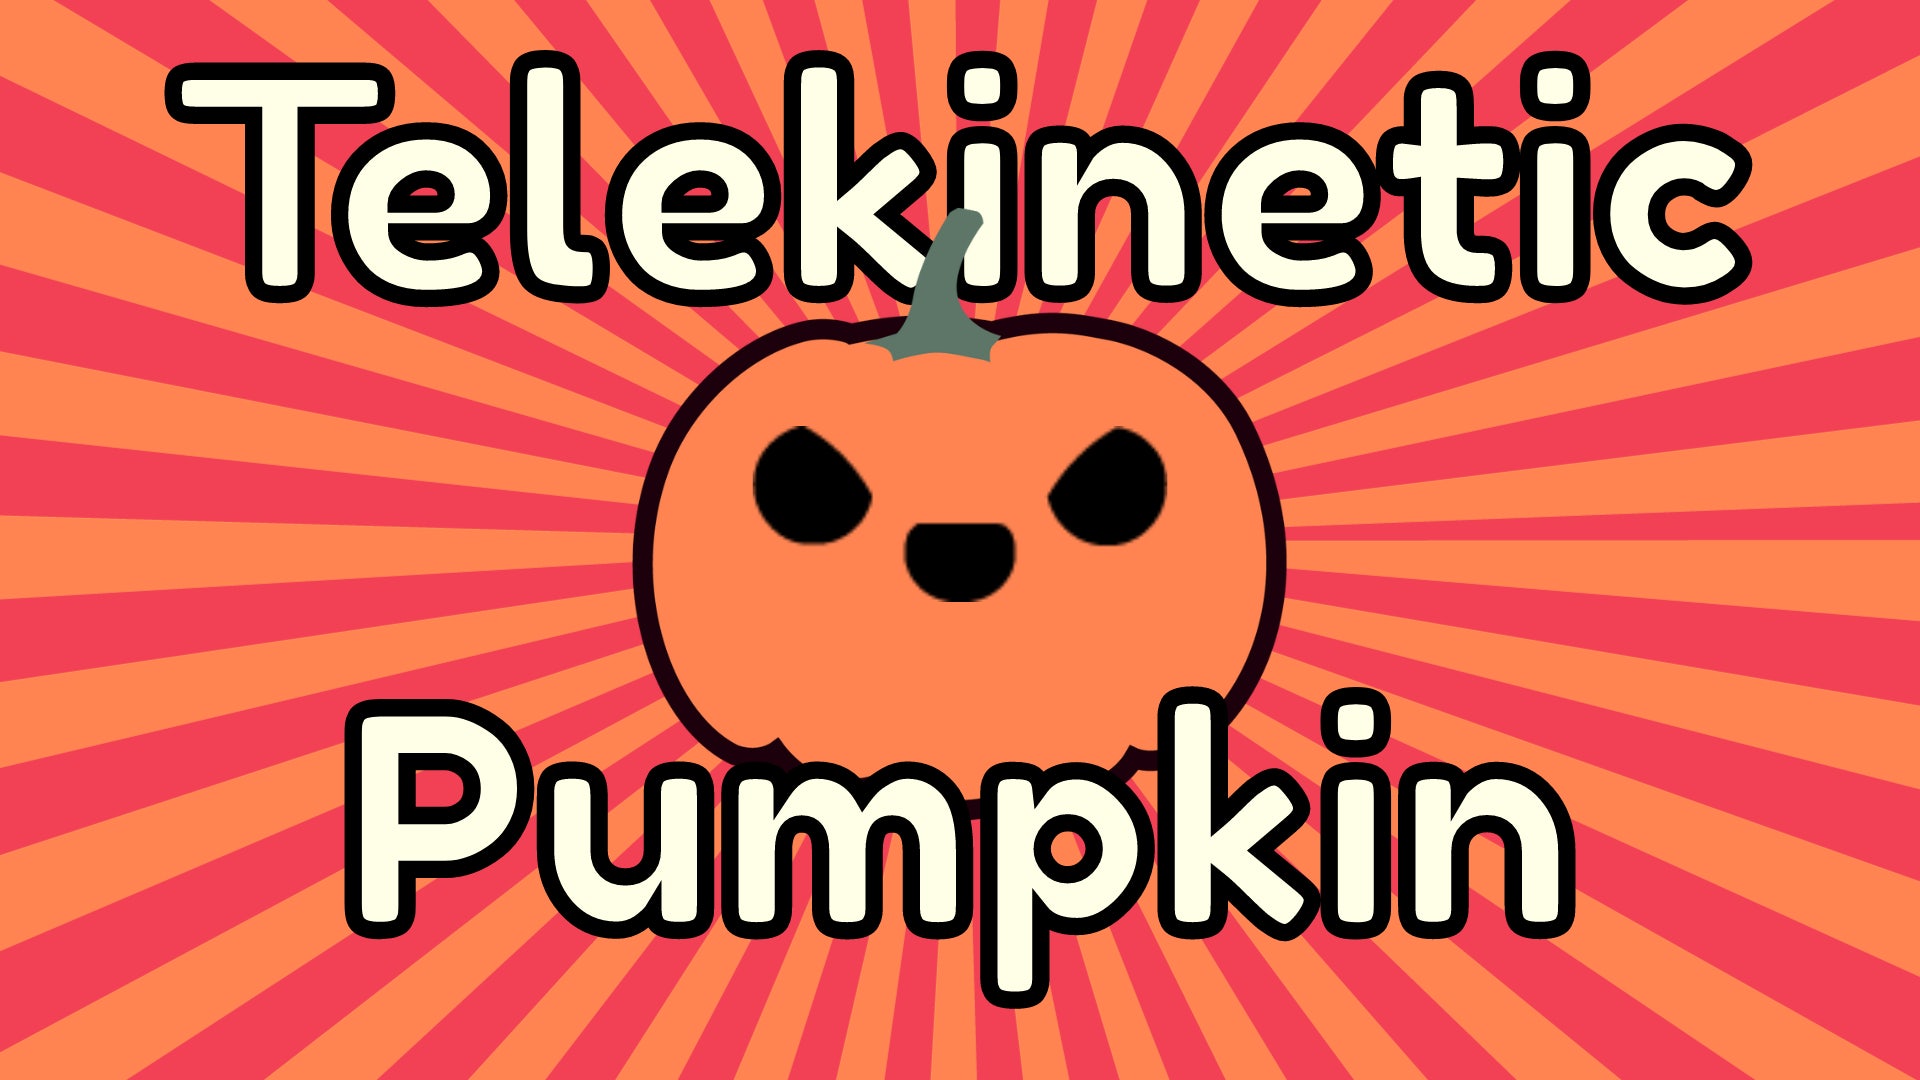 Telekinetic Pumpkin